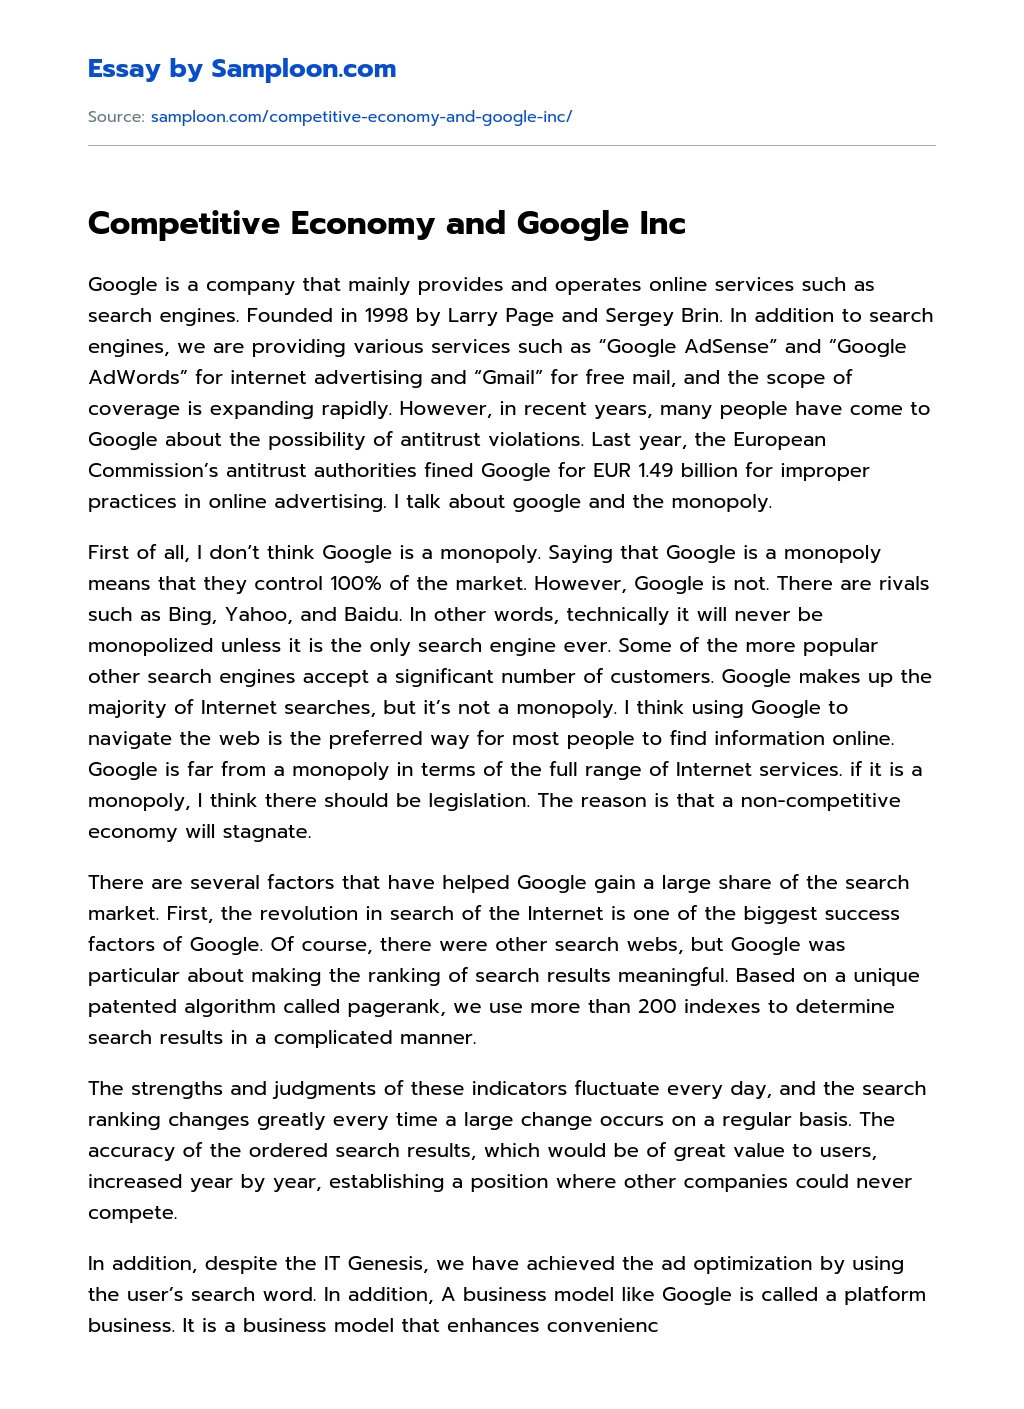 Competitive Economy and Google Inc essay